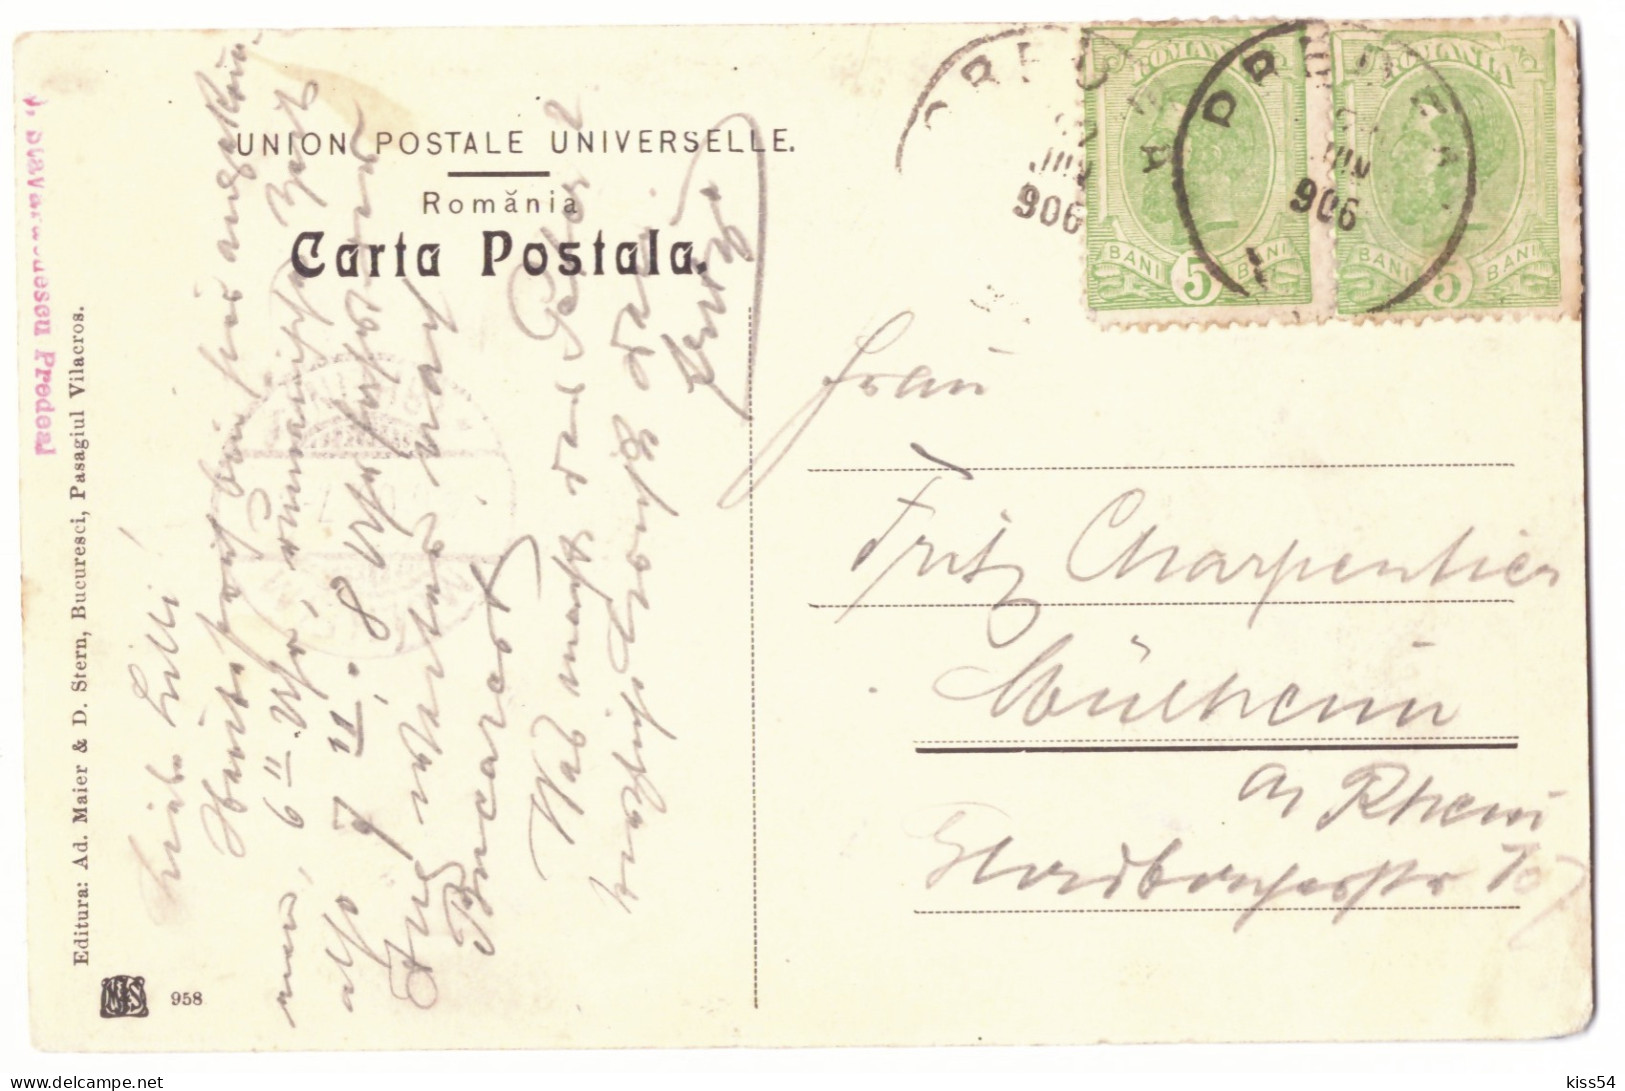 RO 83 - 21110 PREDEAL, Brasov, Romania - Old Postcard - Used - 1906 - Romania